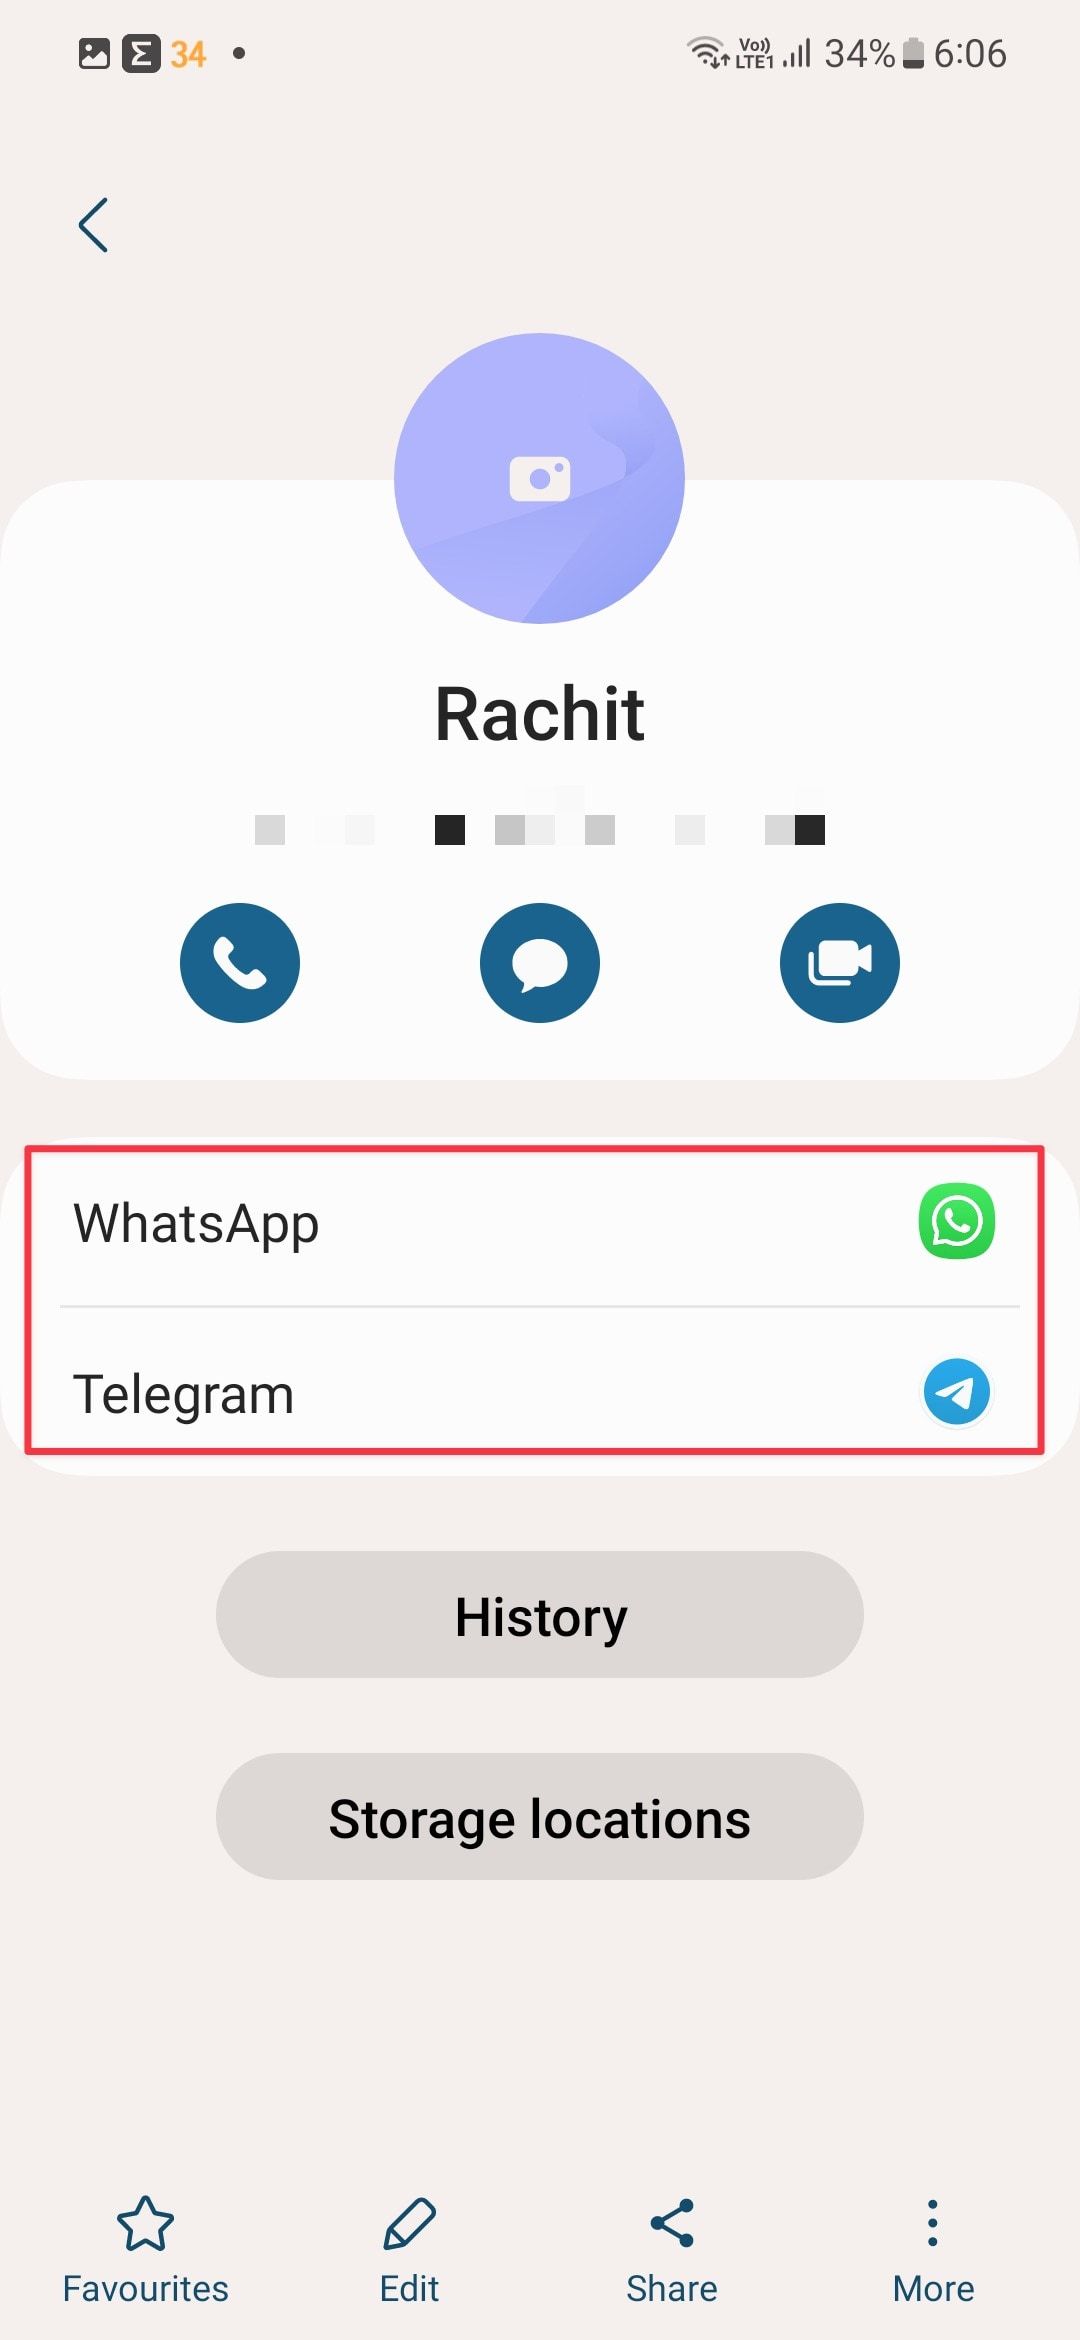 Samsung Contact info page screenshot showing WhatsApp and Telegram